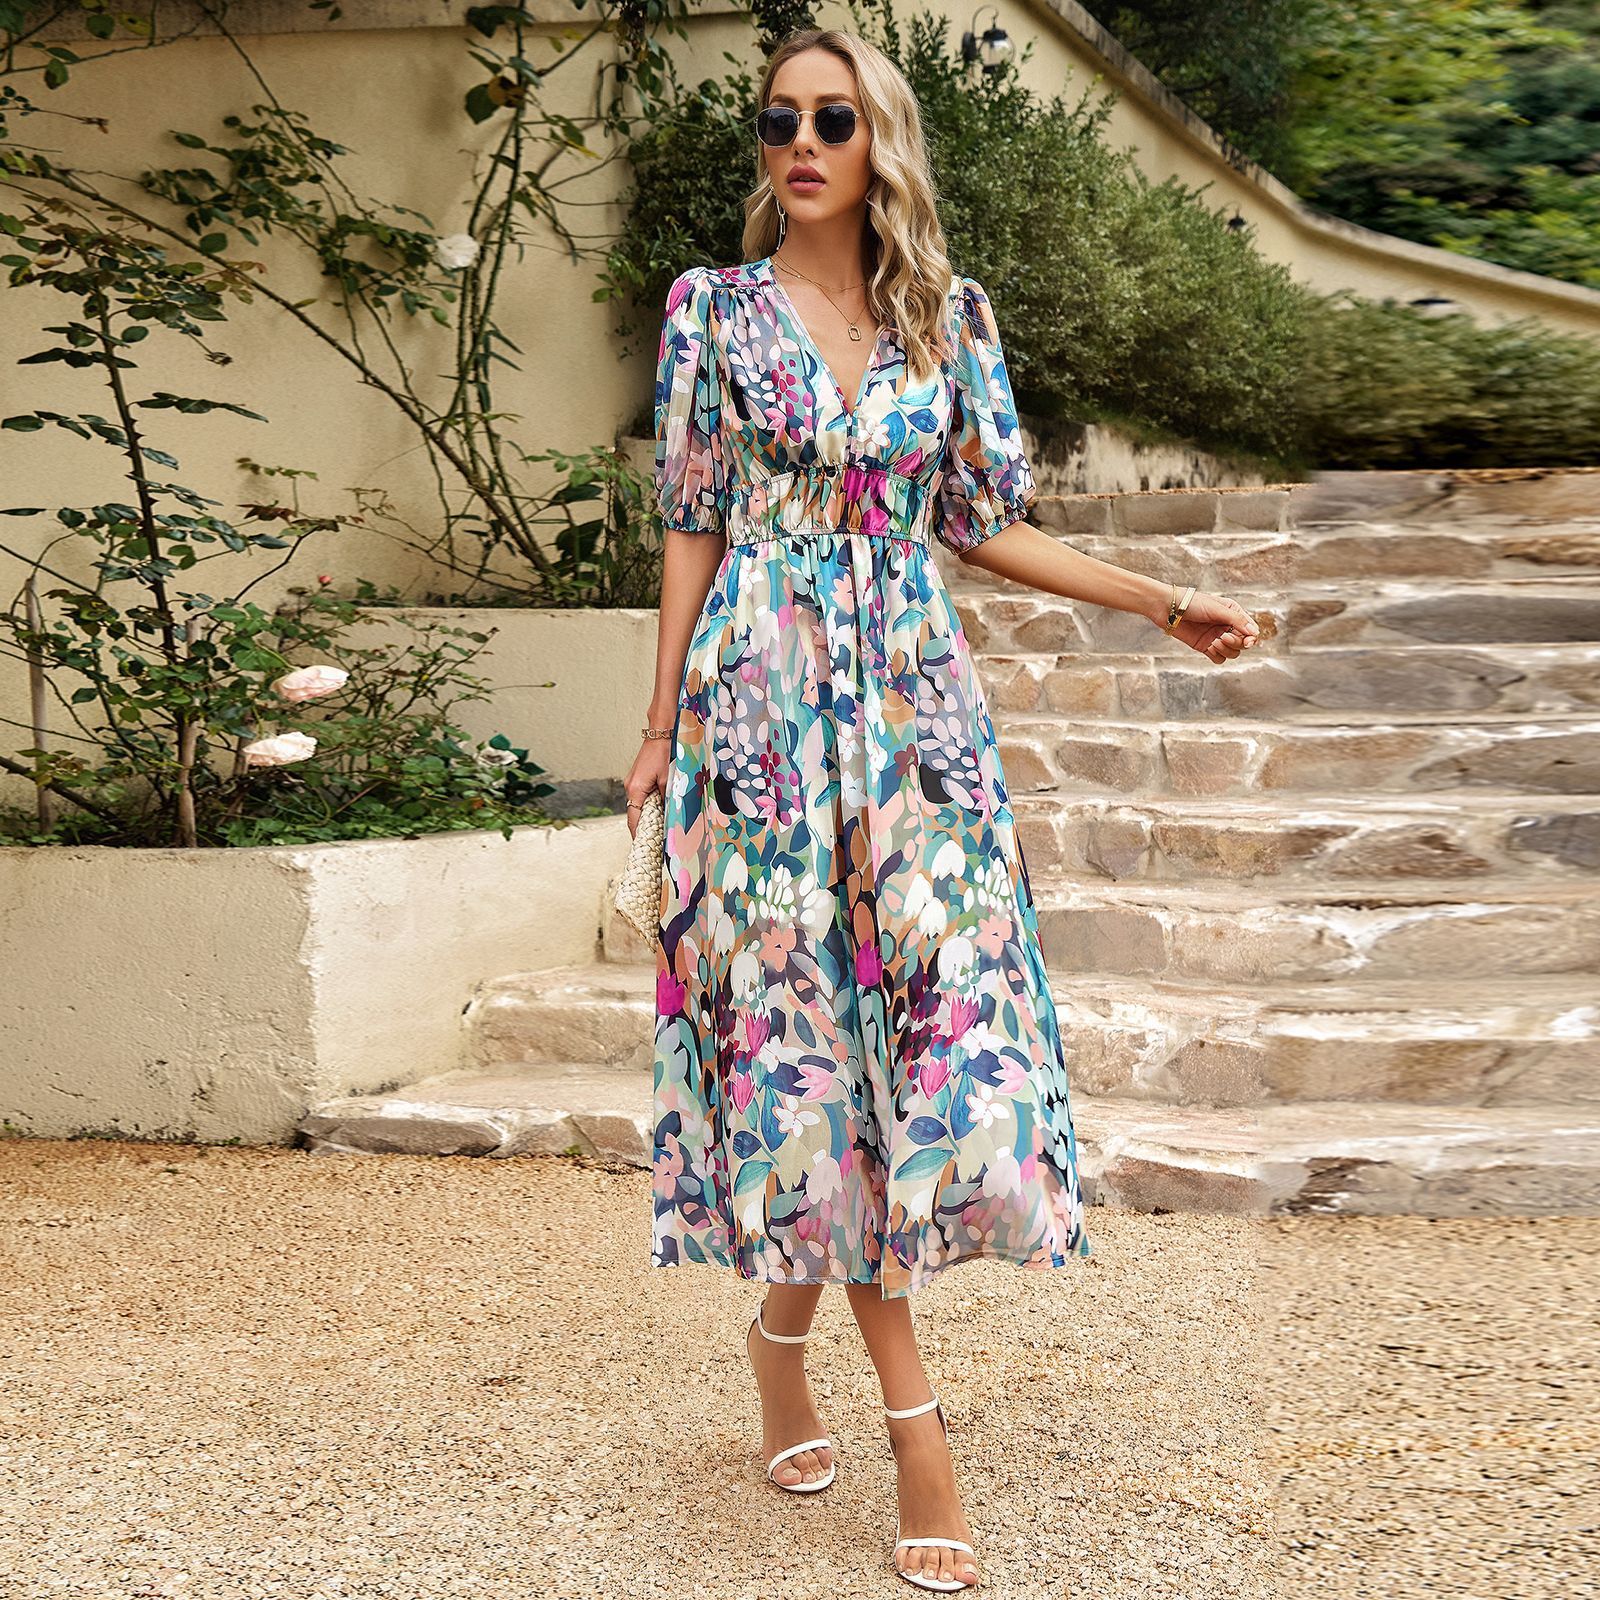 New V-neck Printed Short-sleeved Long Dress Summer Fashion Slim Seaside Vacation Beach Dresses For Women Clothing - SELFTRITSS